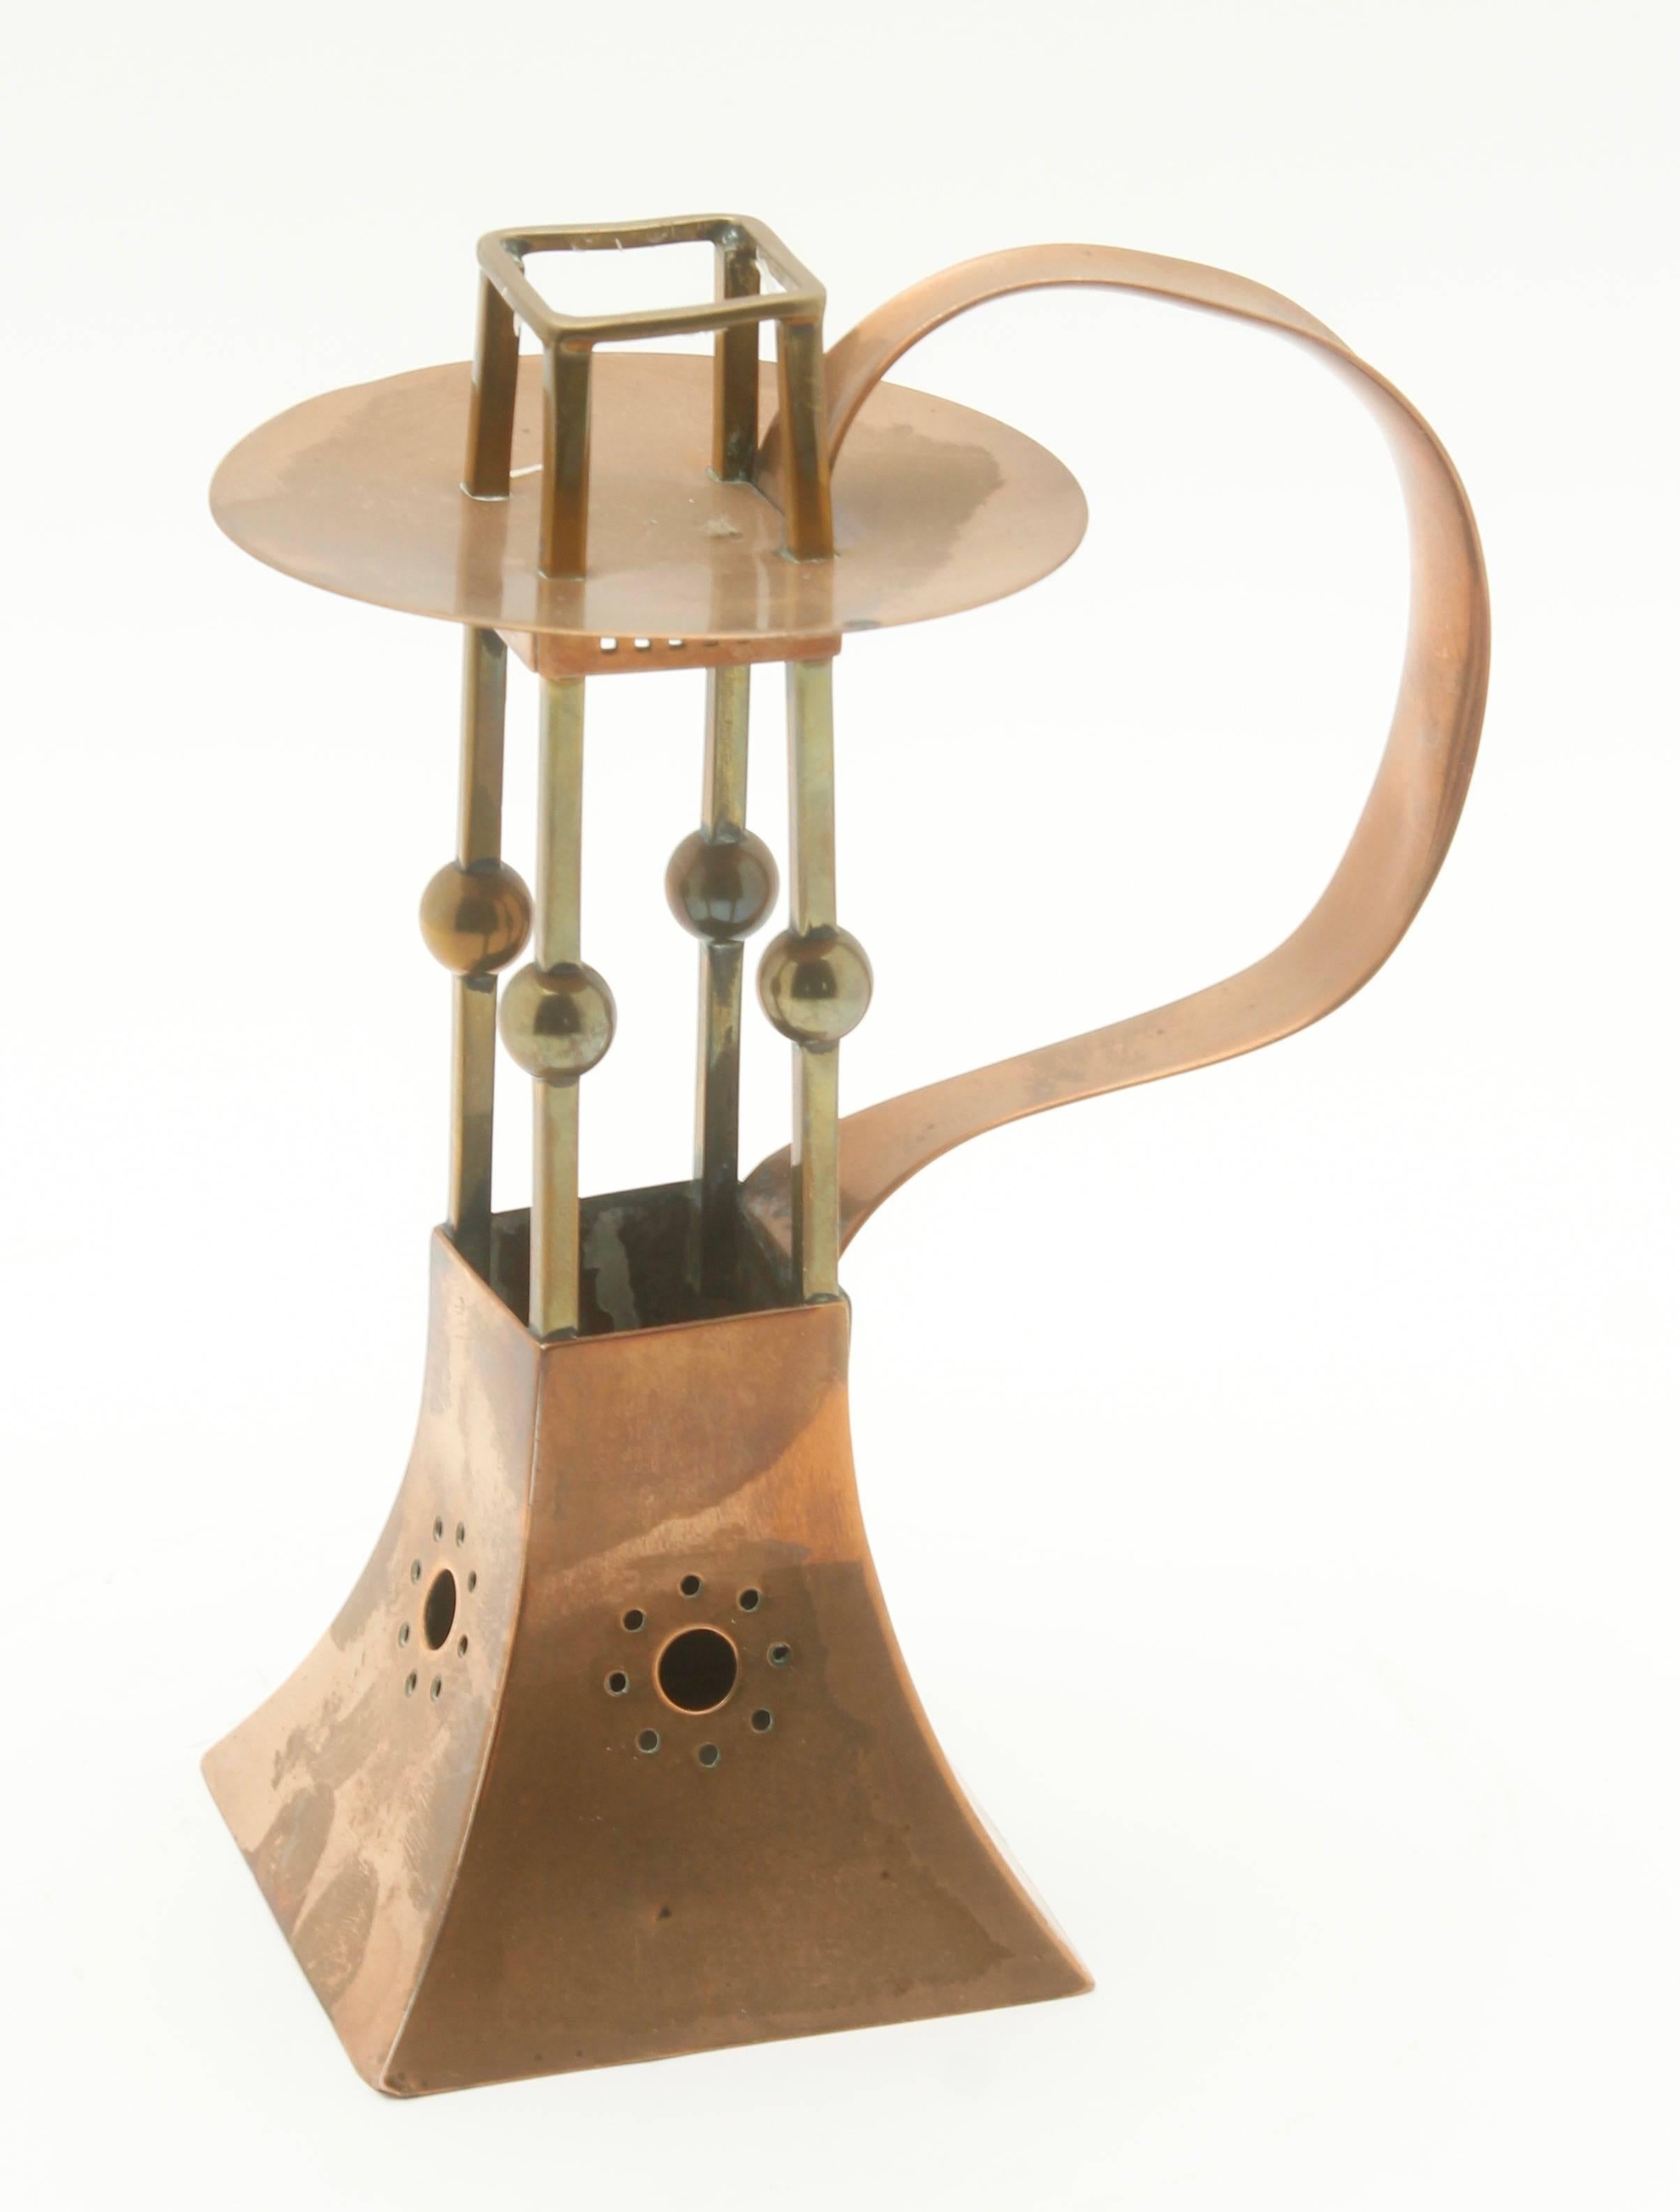 C.D.E Werks of Carl Deffner (1856-1948) of Esslingen, Germany

superb Jugendstil copper and brass candle stick by the famous C.D.E Werks of Carl Deffner of Esslingen, Germany. The base, handle and drip tray are constructed of copper and the